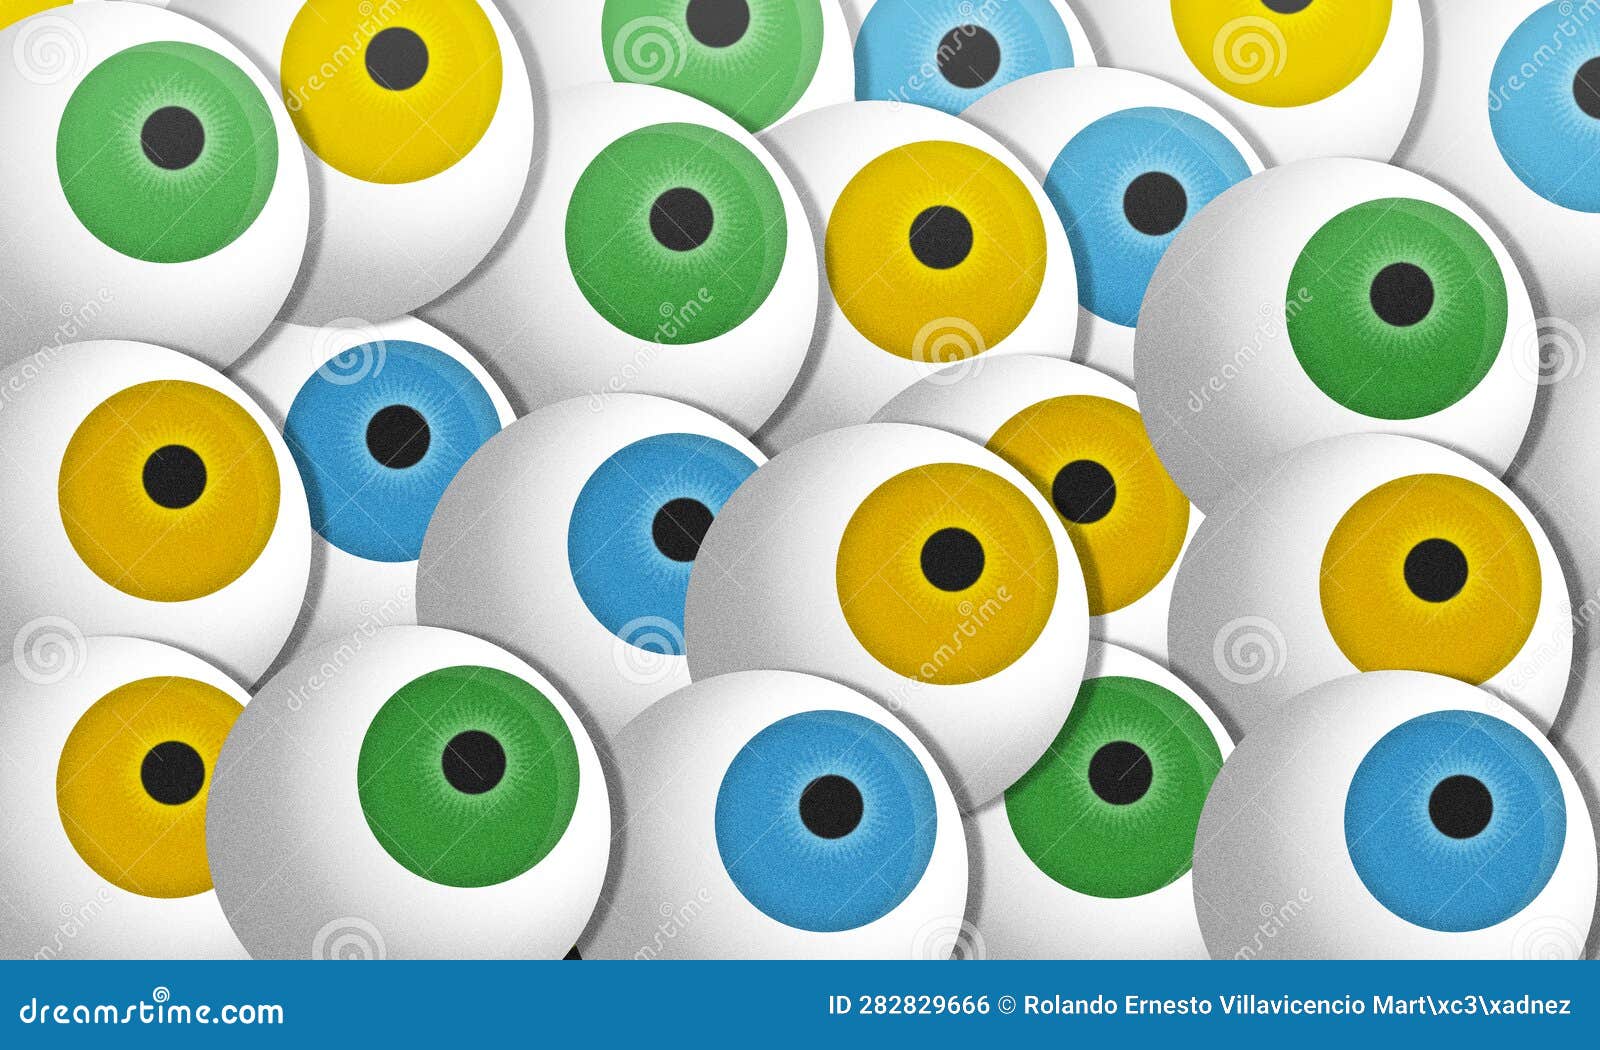  of a set of eyes of different colors.obra de arte e ilustraciÃÂ³n